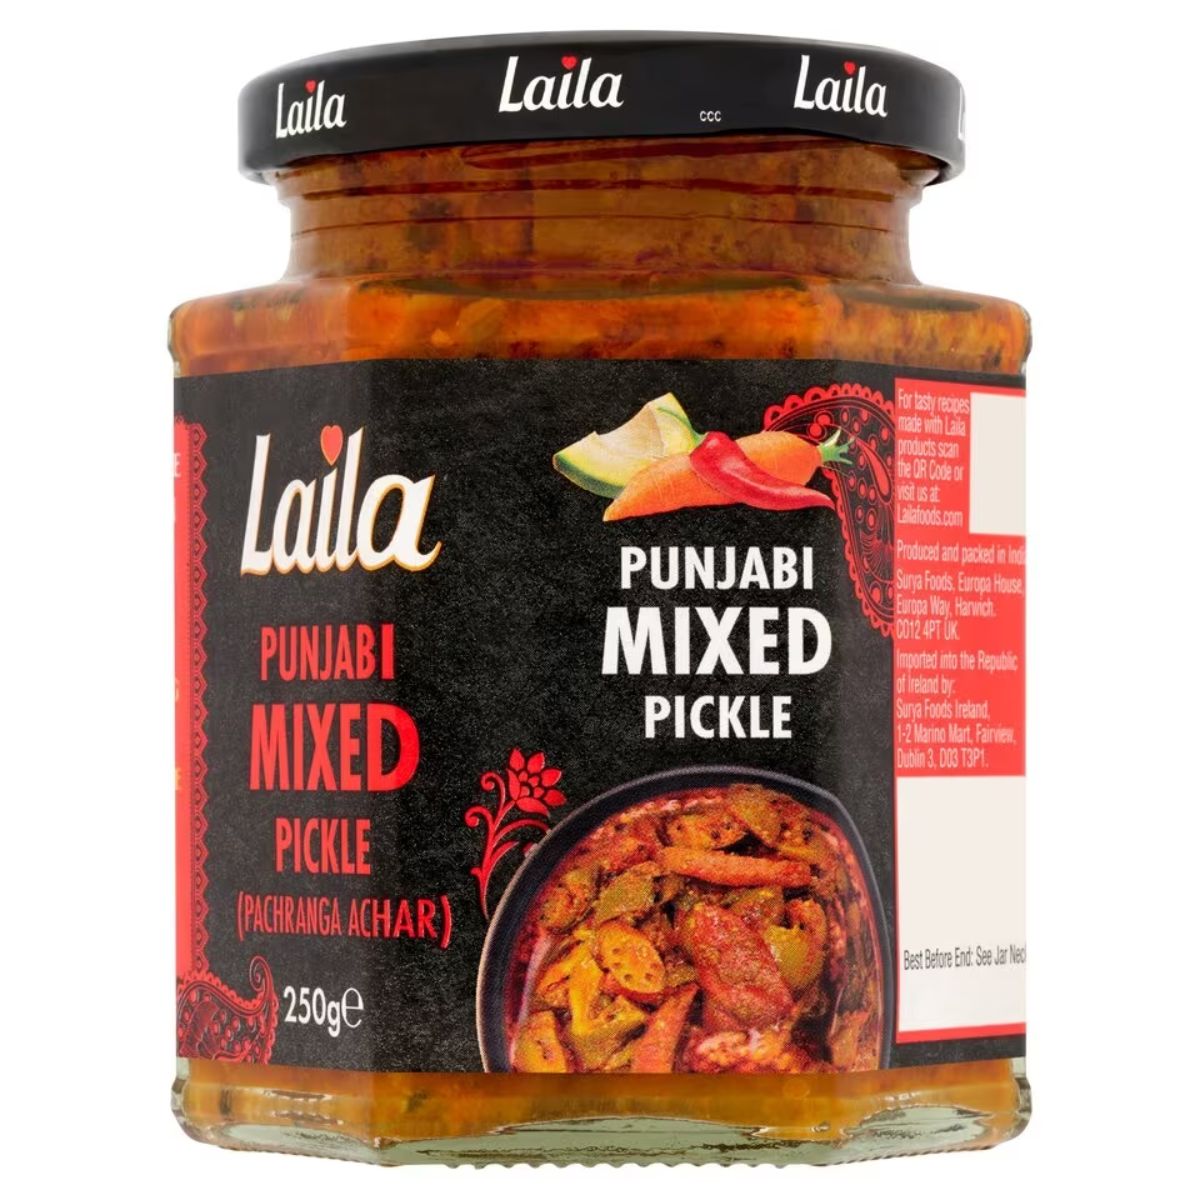 A jar of Laila - Punjabi Mixed Pickle - 250g.